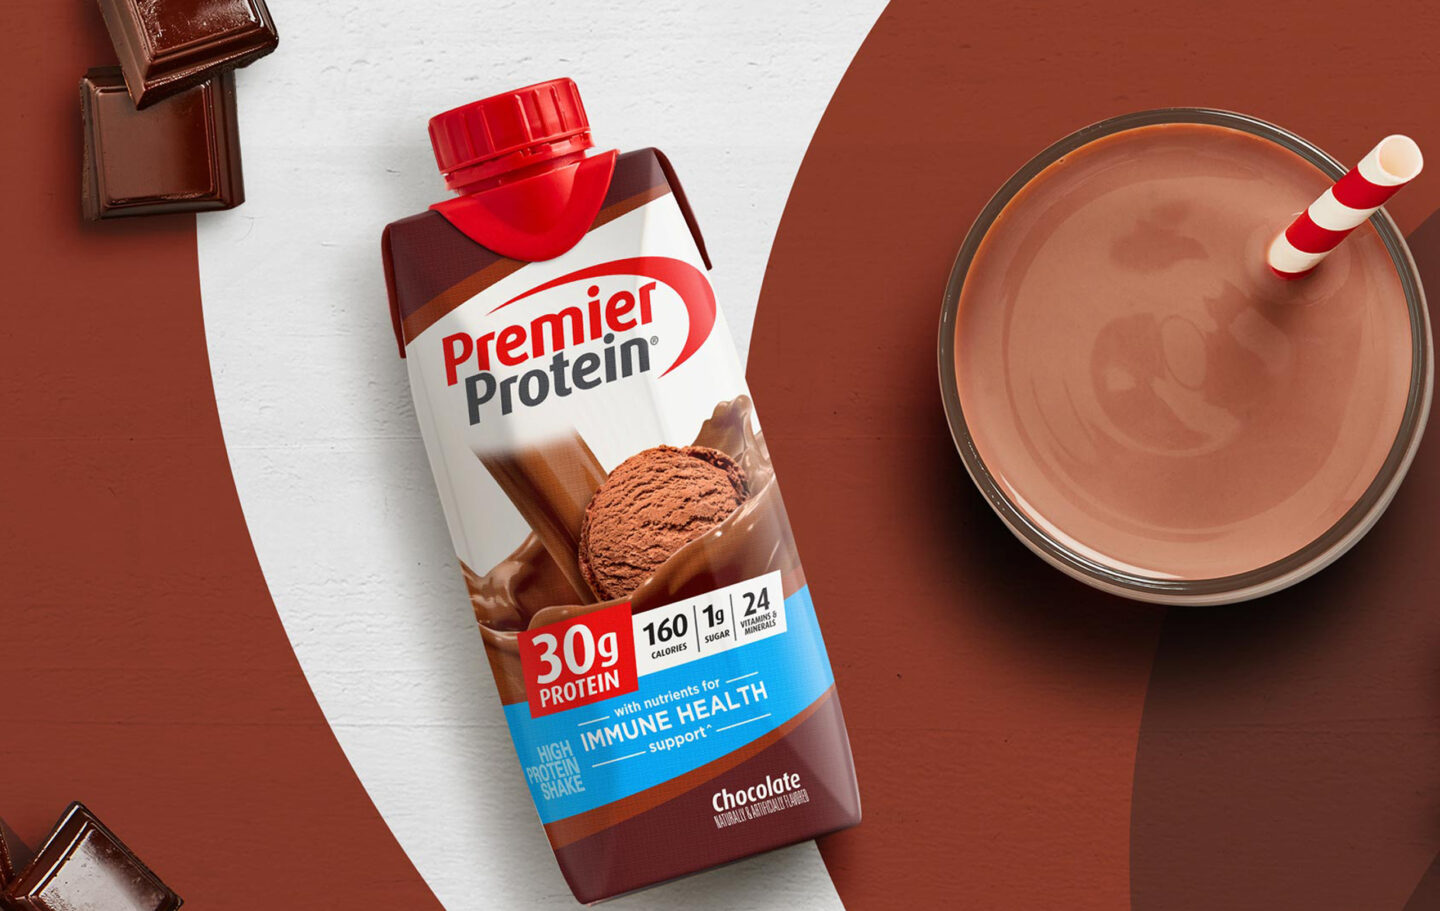 A single tetra bottle of Premier Protein Chocolate Protein Shake.